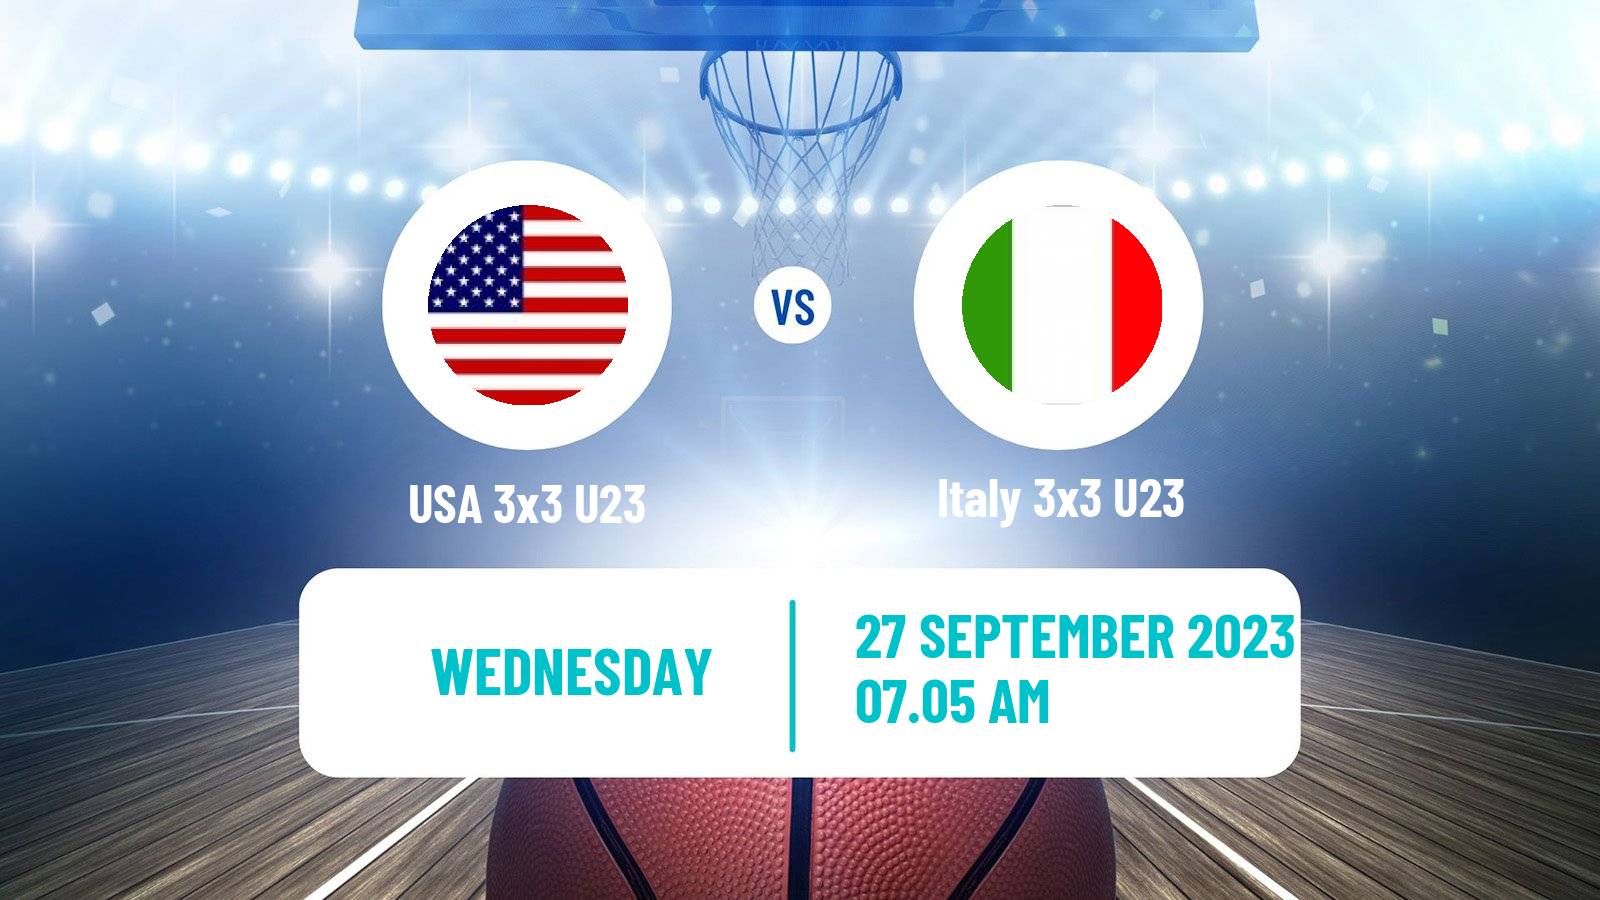 Basketball World Cup Basketball 3x3 U23 USA 3x3 U23 - Italy 3x3 U23